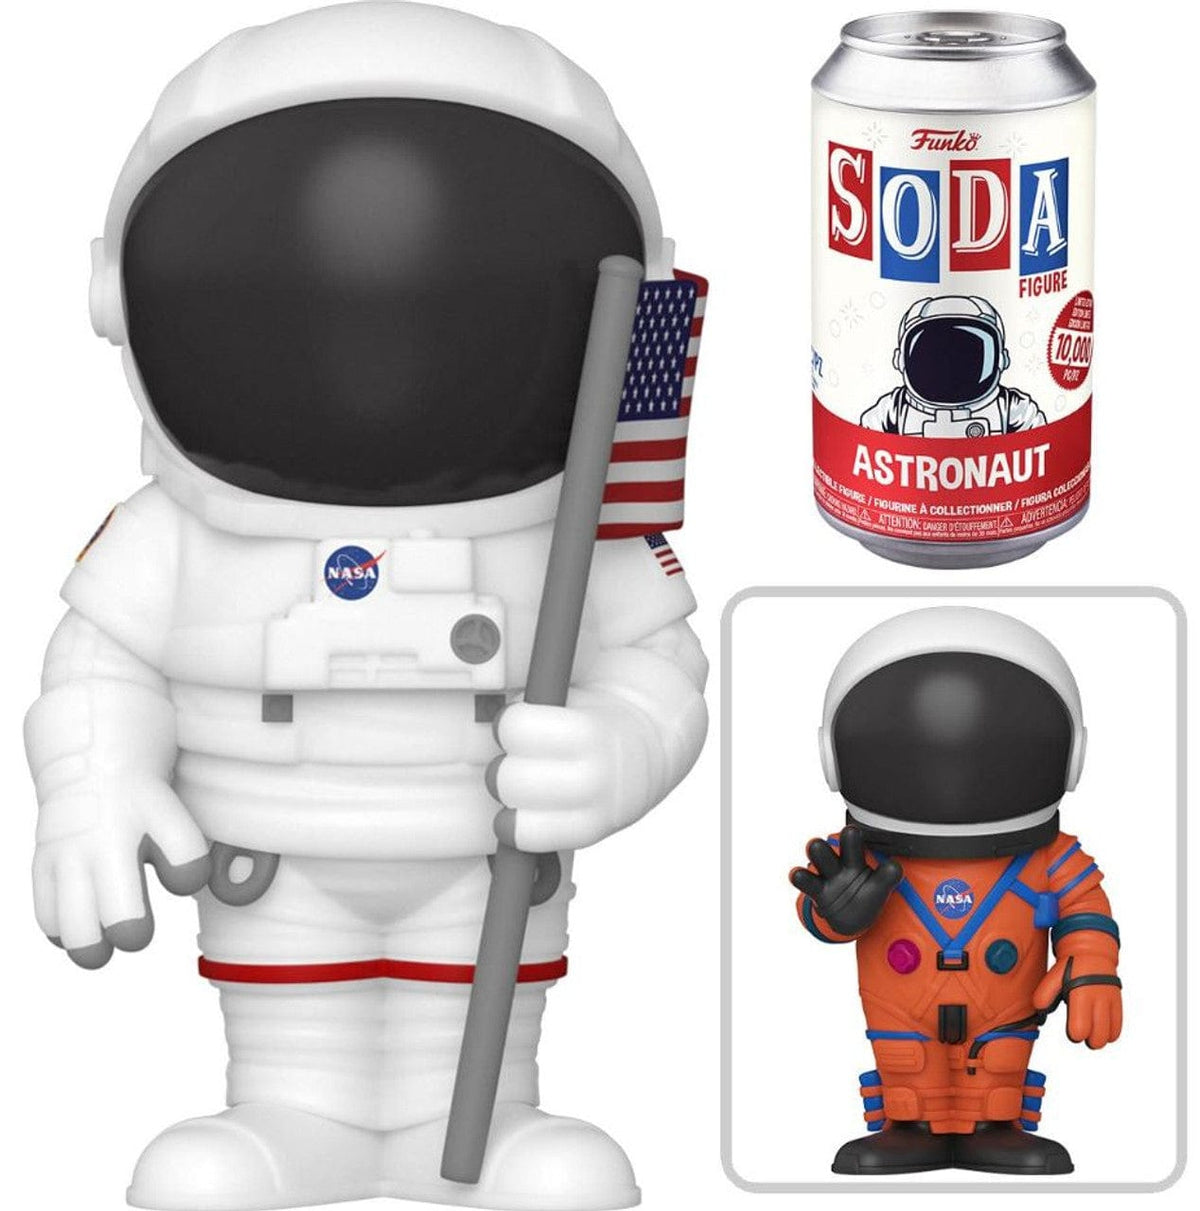 Funko Soda: NASA - Astronaut - Third Eye